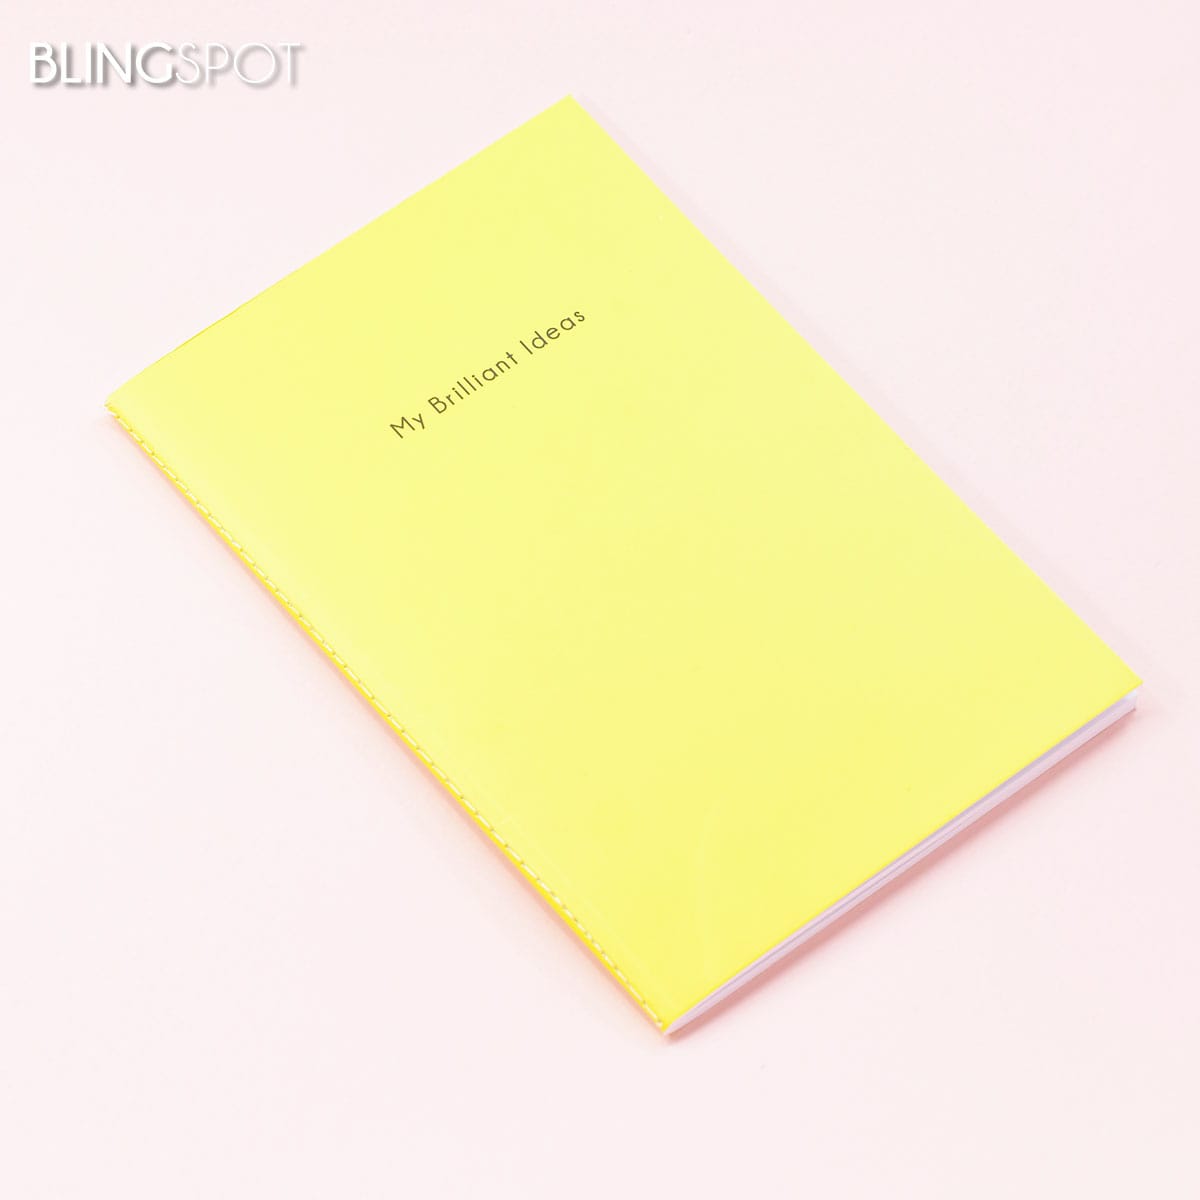 My Brilliant Ideas Bullet Notebook Journal